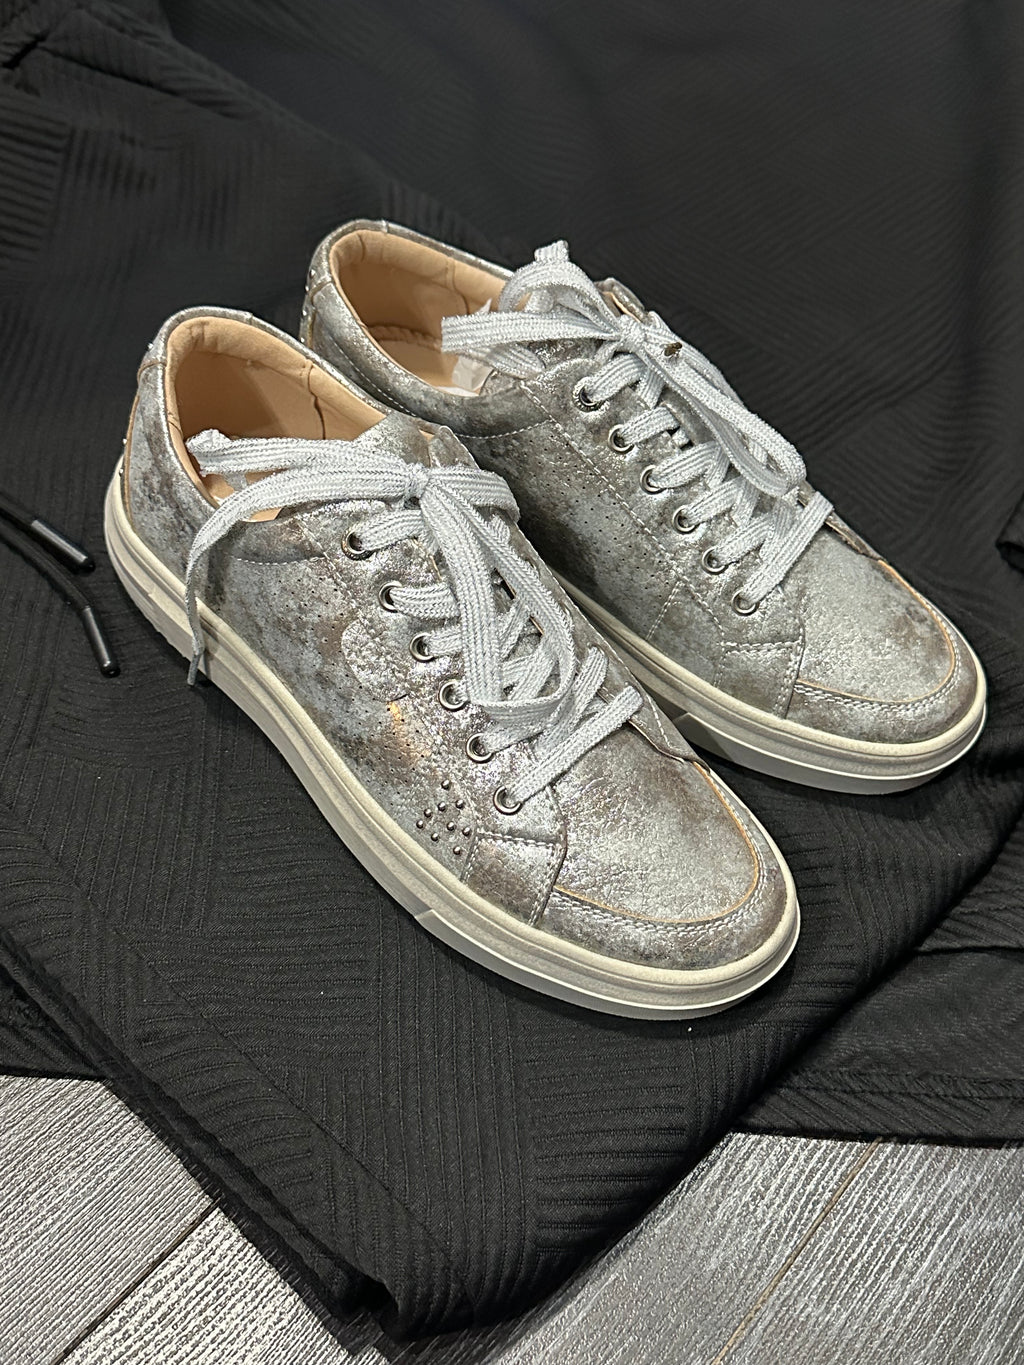 Down Time Sneakers by Corkys (Silver Metallic)